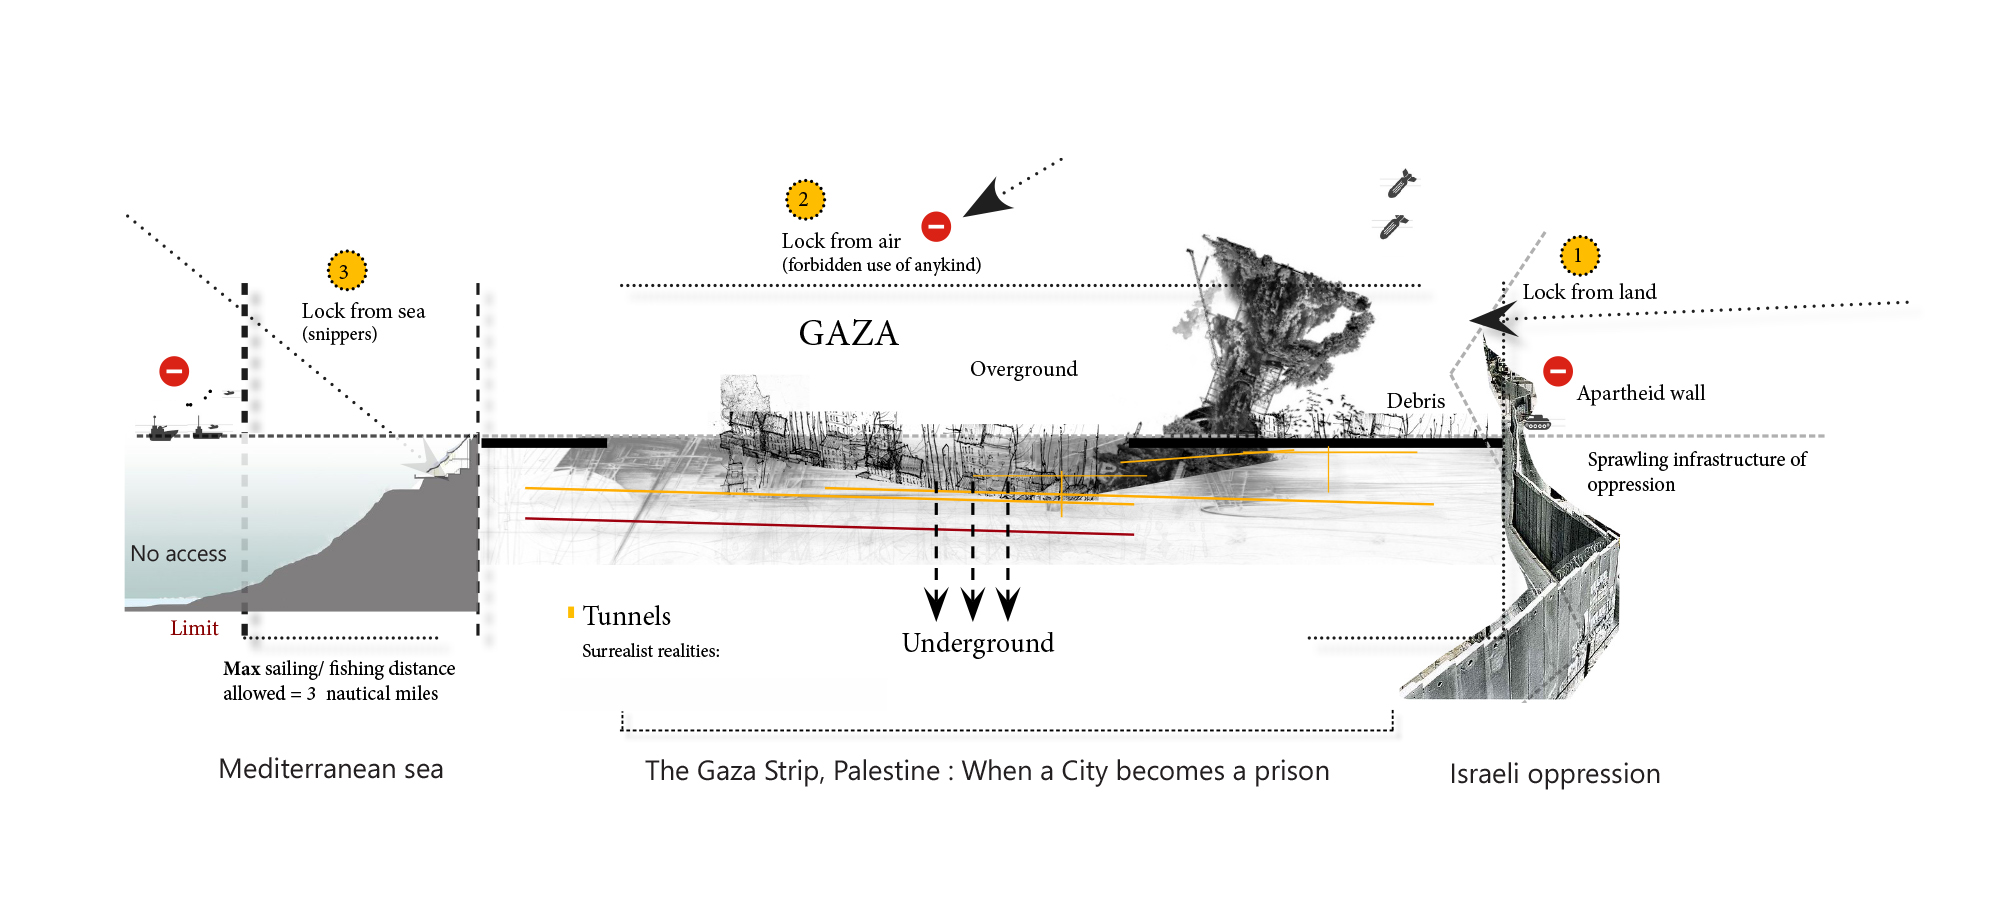 Arwa Qalalwa - The Incarceration of a City: The Gaza Strip Under Destruction and Incarceration